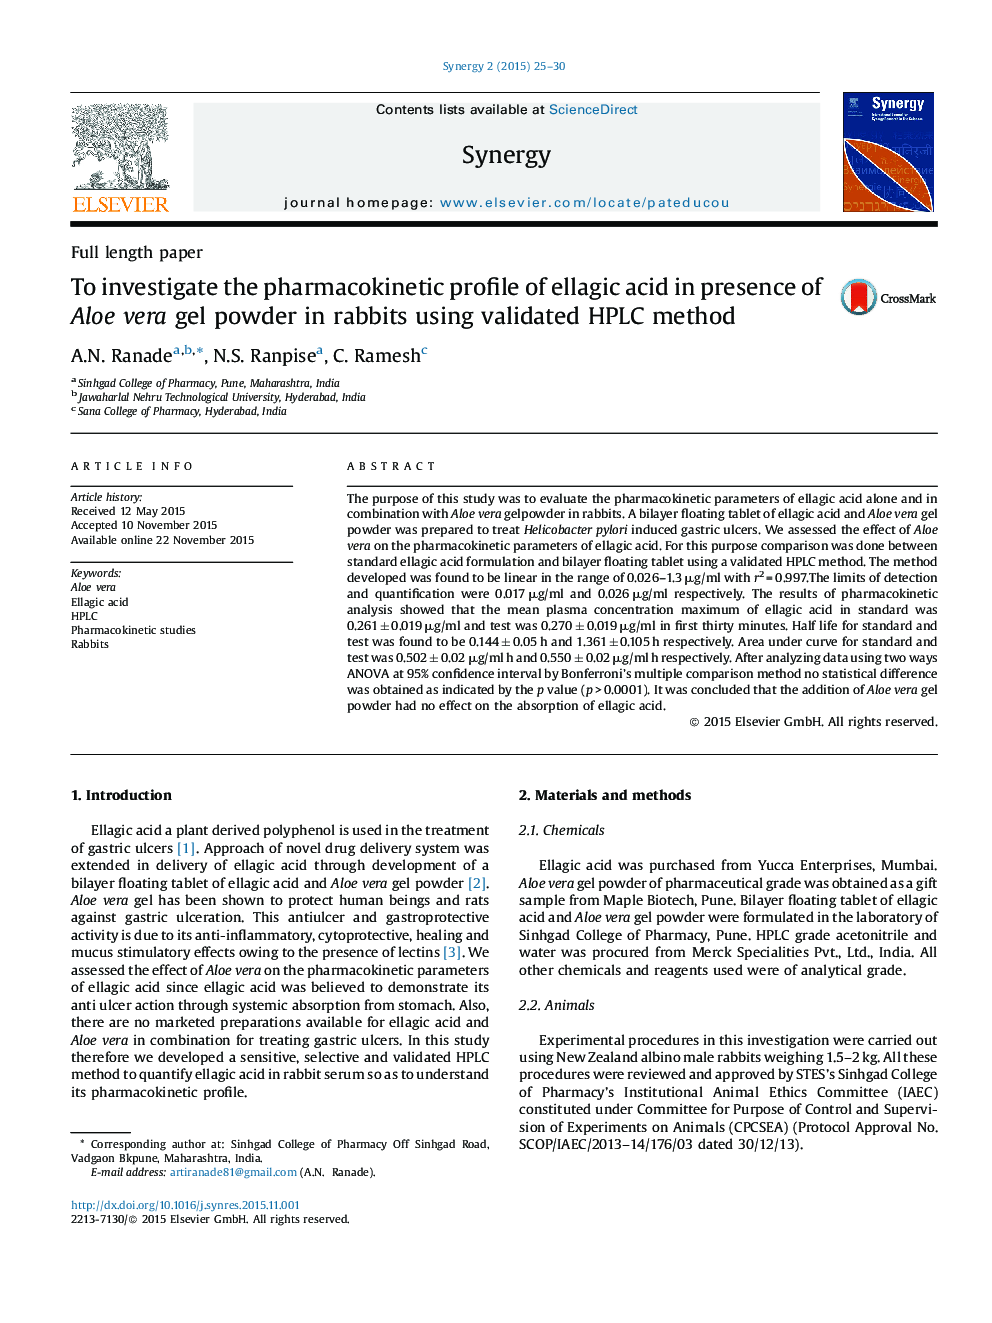 To investigate the pharmacokinetic profile of ellagic acid in presence of Aloe vera gel powder in rabbits using validated HPLC method